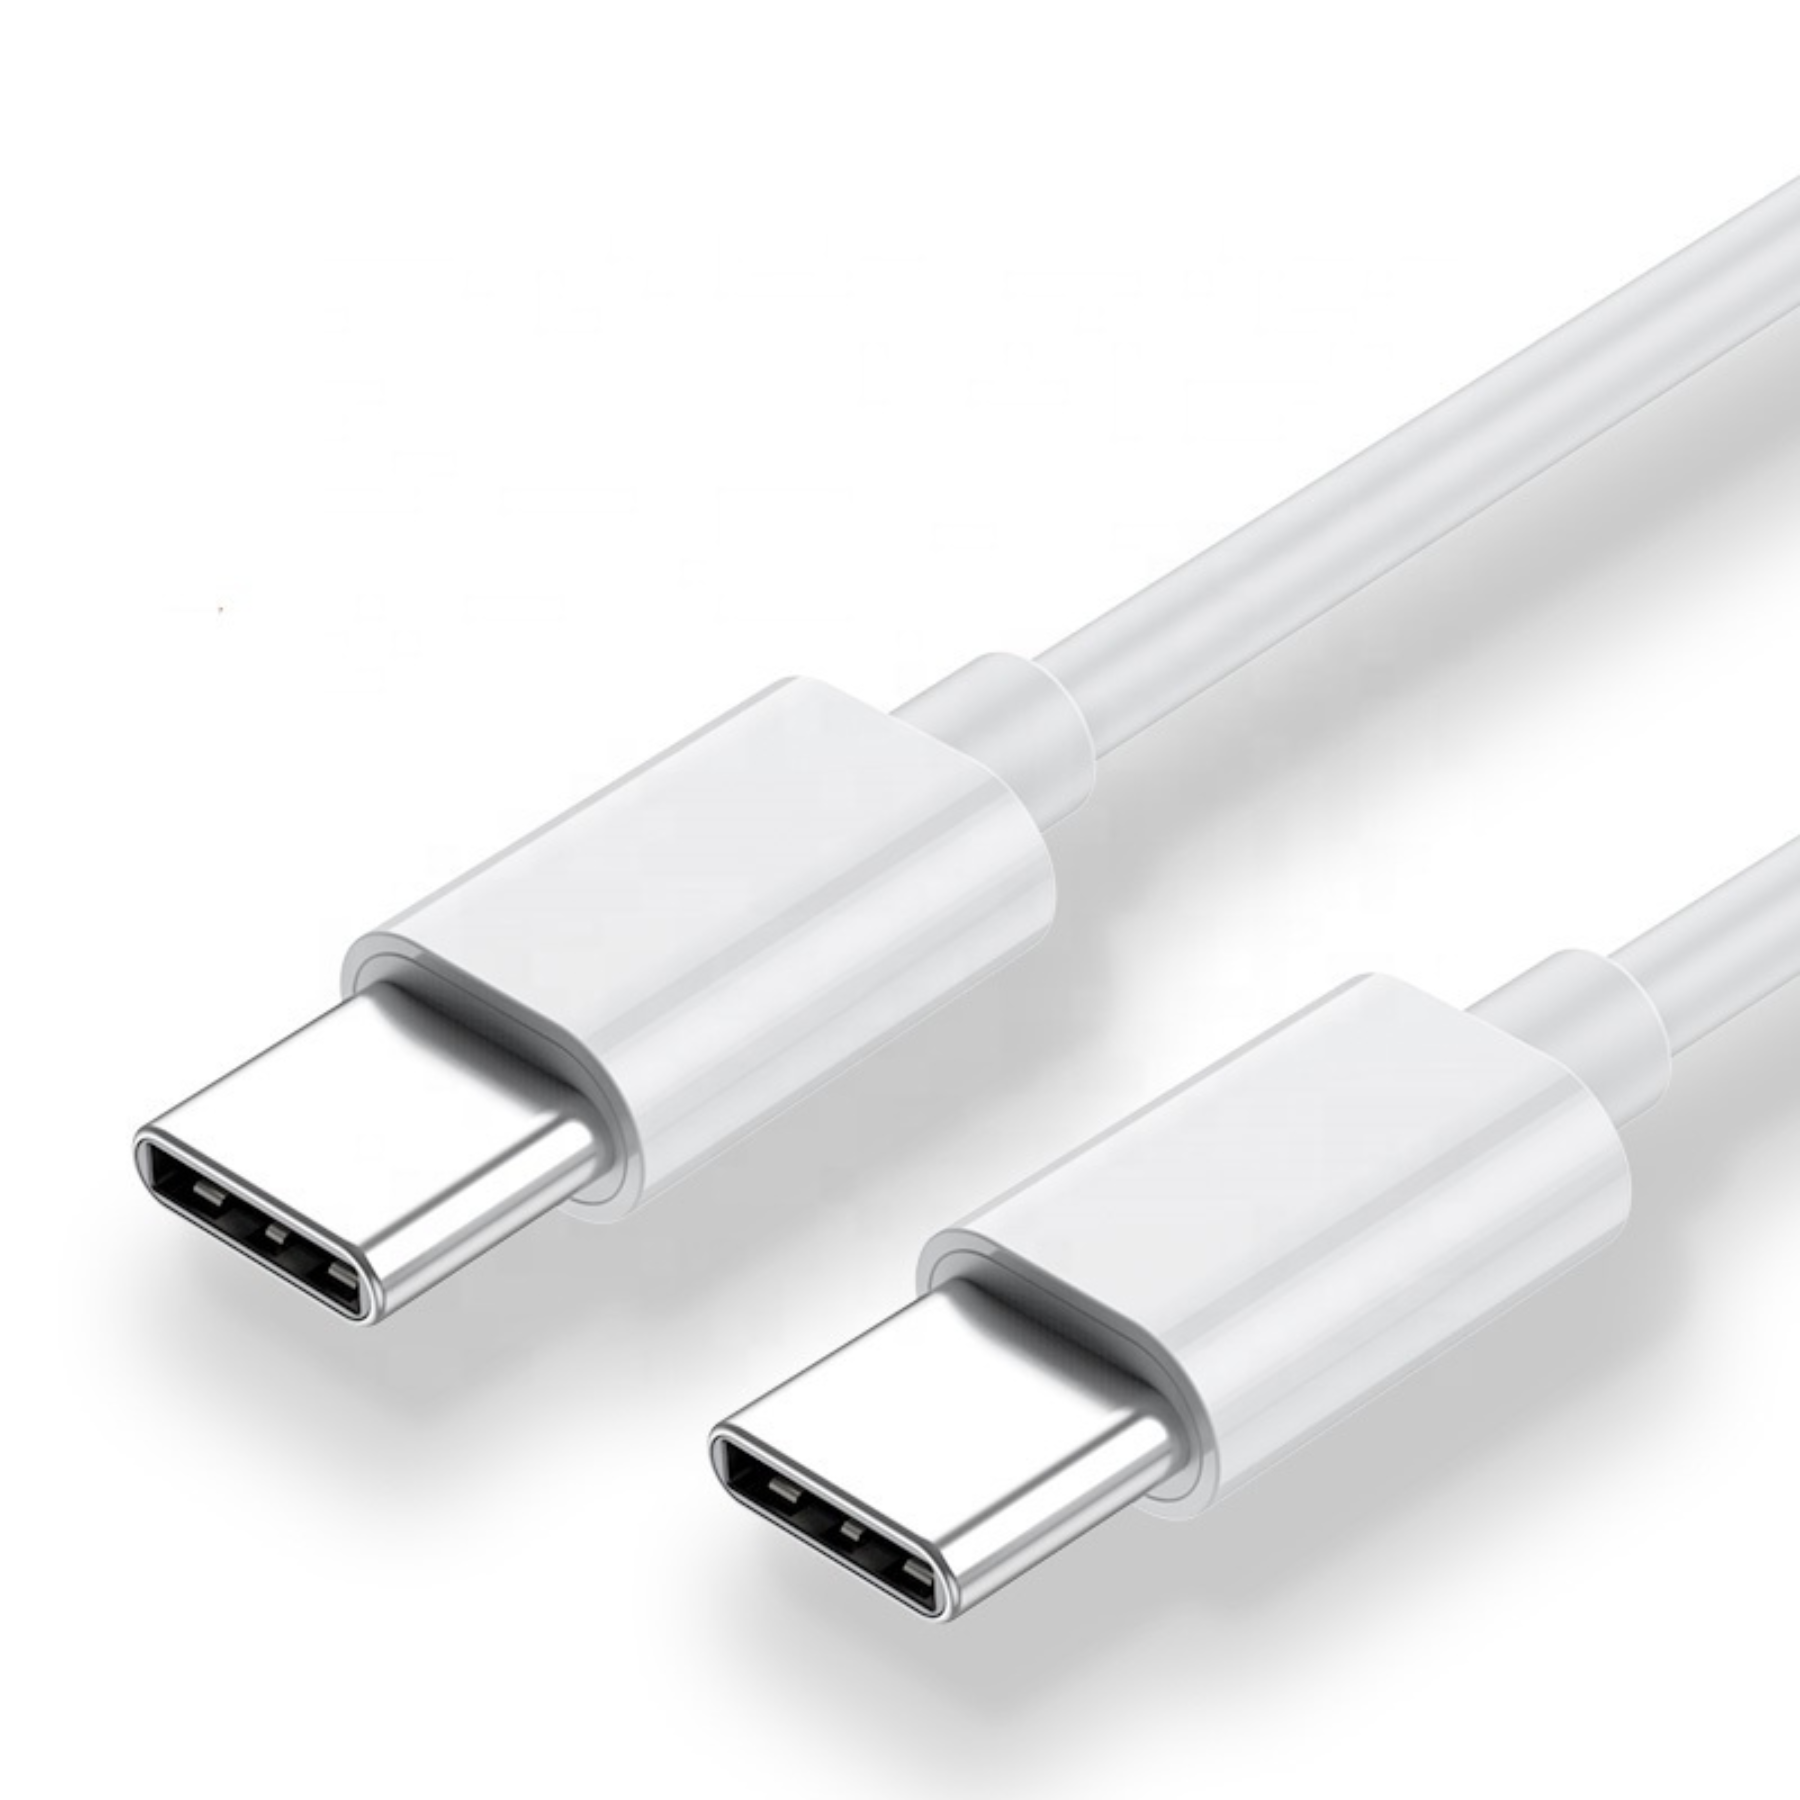 TRMK Ladegerät USB C iPhone Netzteil / Apple 15 iPhone Ladekabel iPhone Apple, weiß für Apple Pro 15 20W weiß Ladekabel Ladegerät